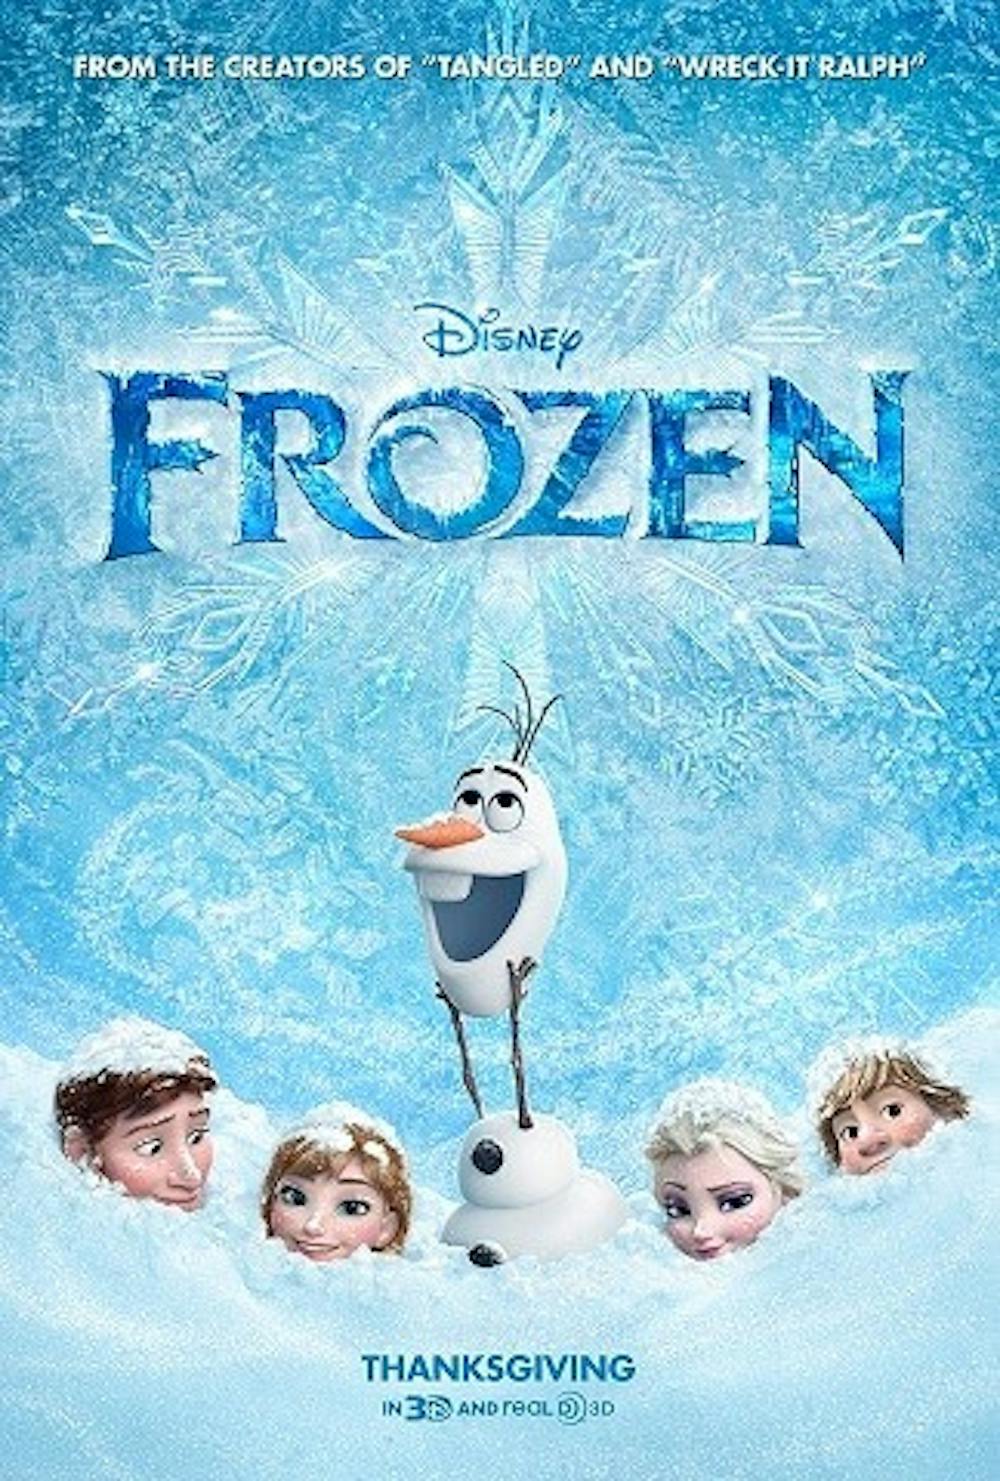 'Frozen' a sensational story of sisterhood